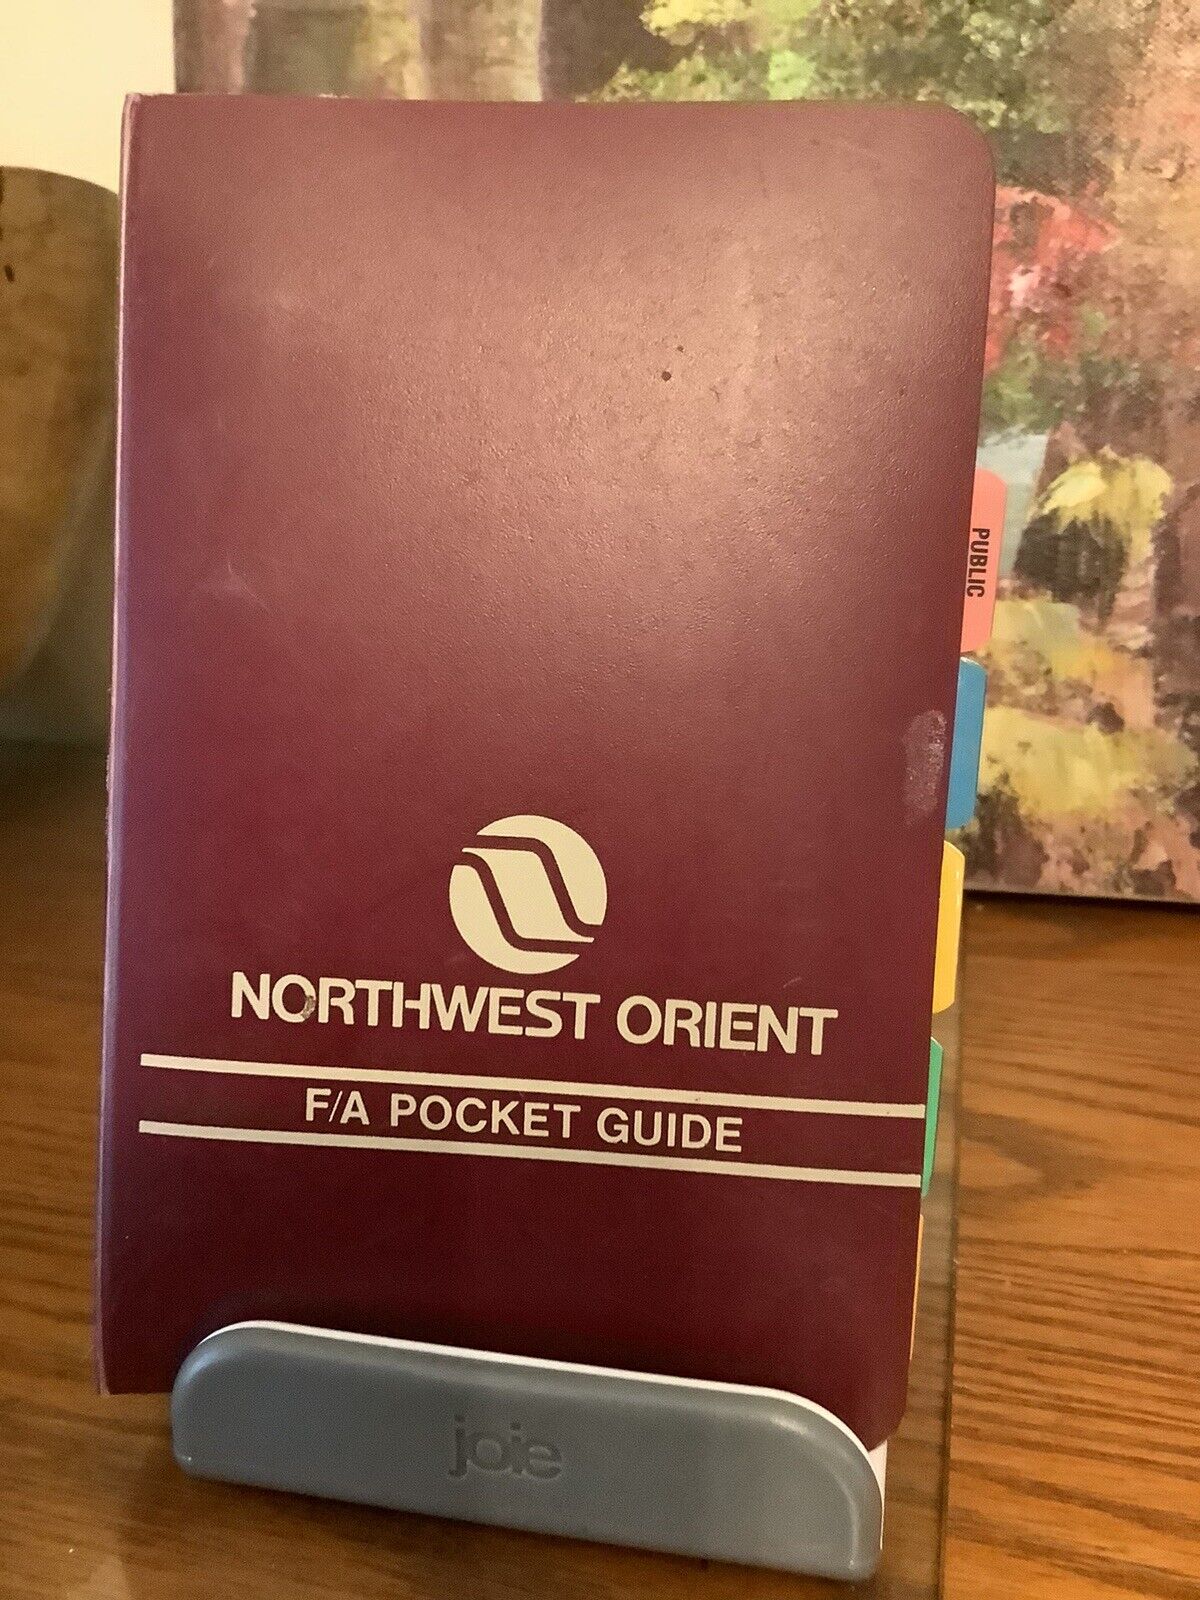 northwest Orient F/A Pocket Guide